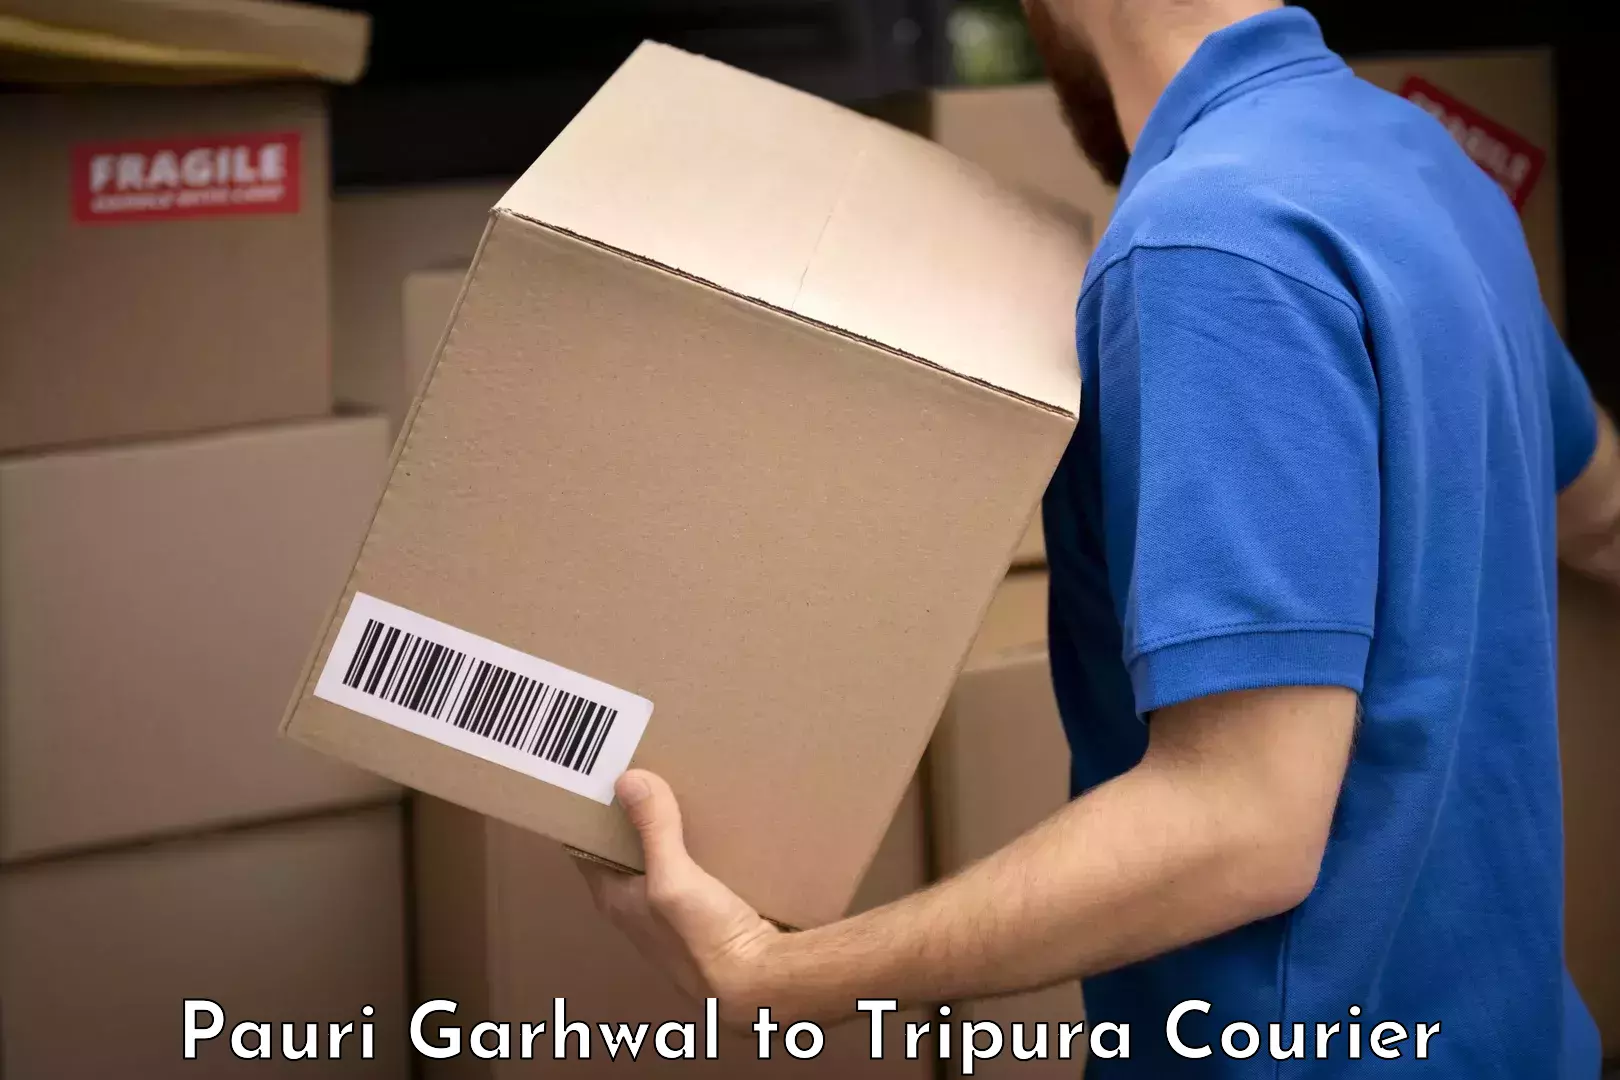 Luggage transport consulting Pauri Garhwal to Udaipur Tripura